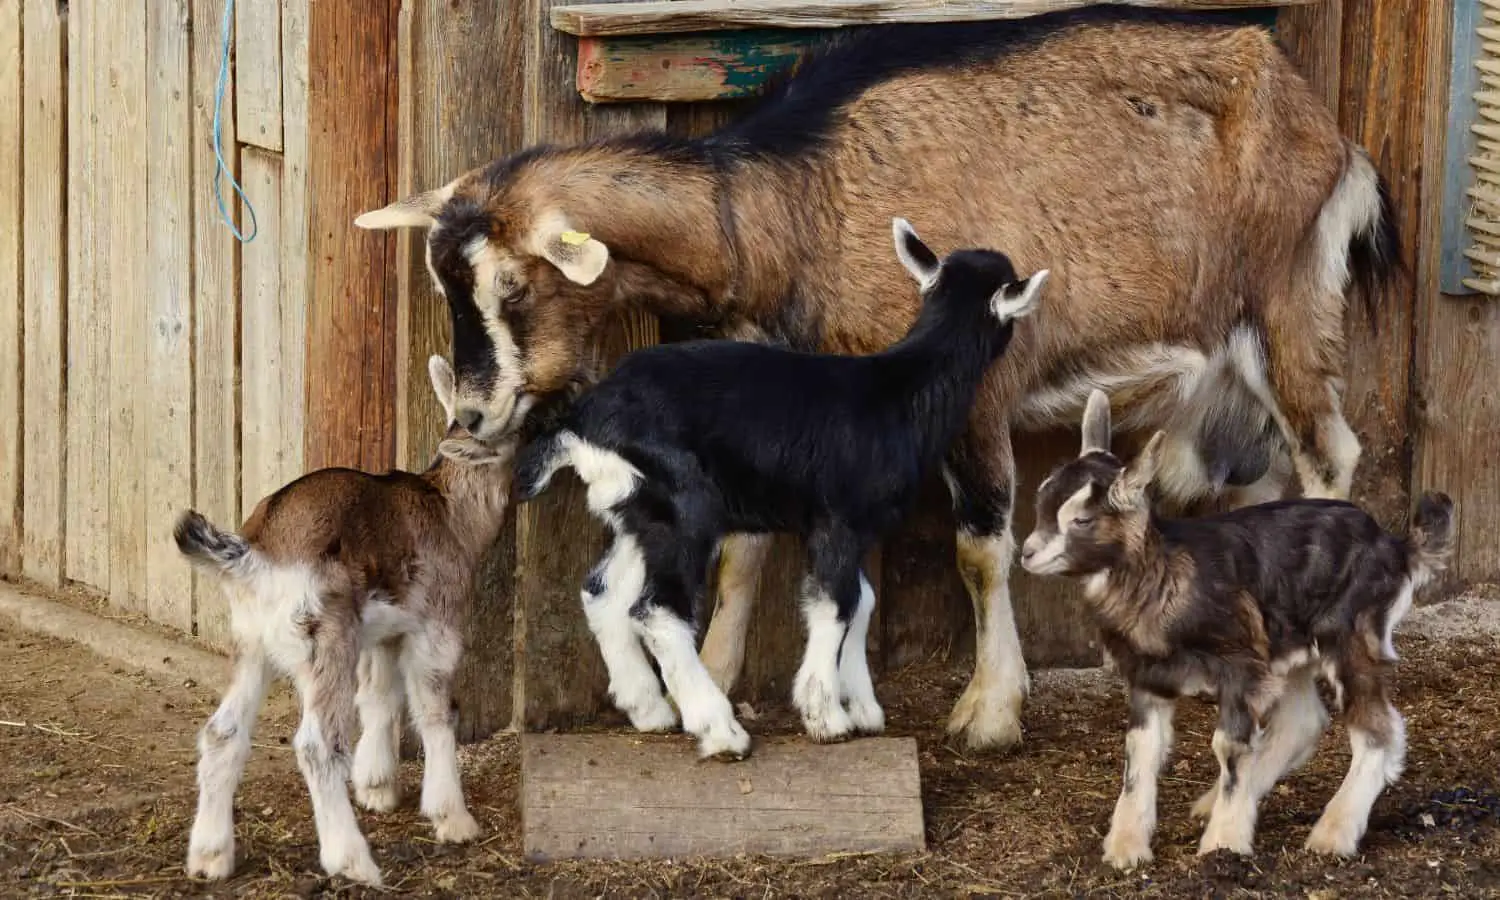 average lifespan of goats